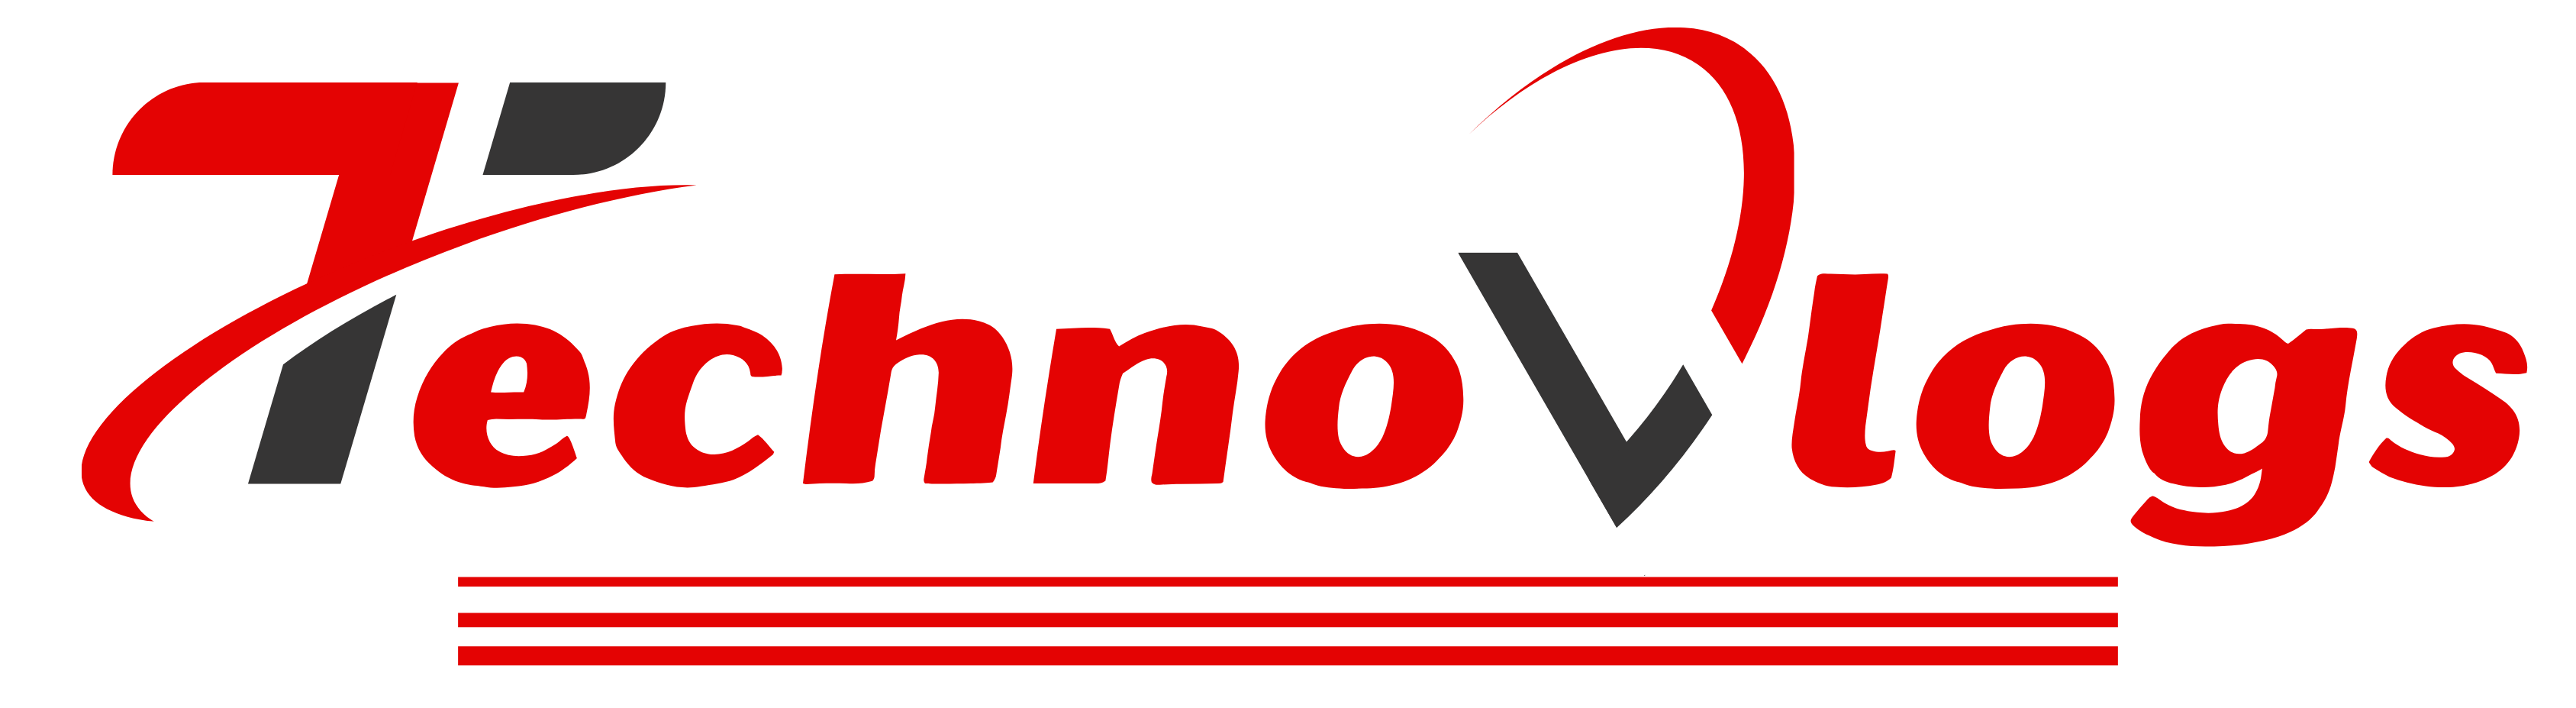 TechnoVlogs Logo